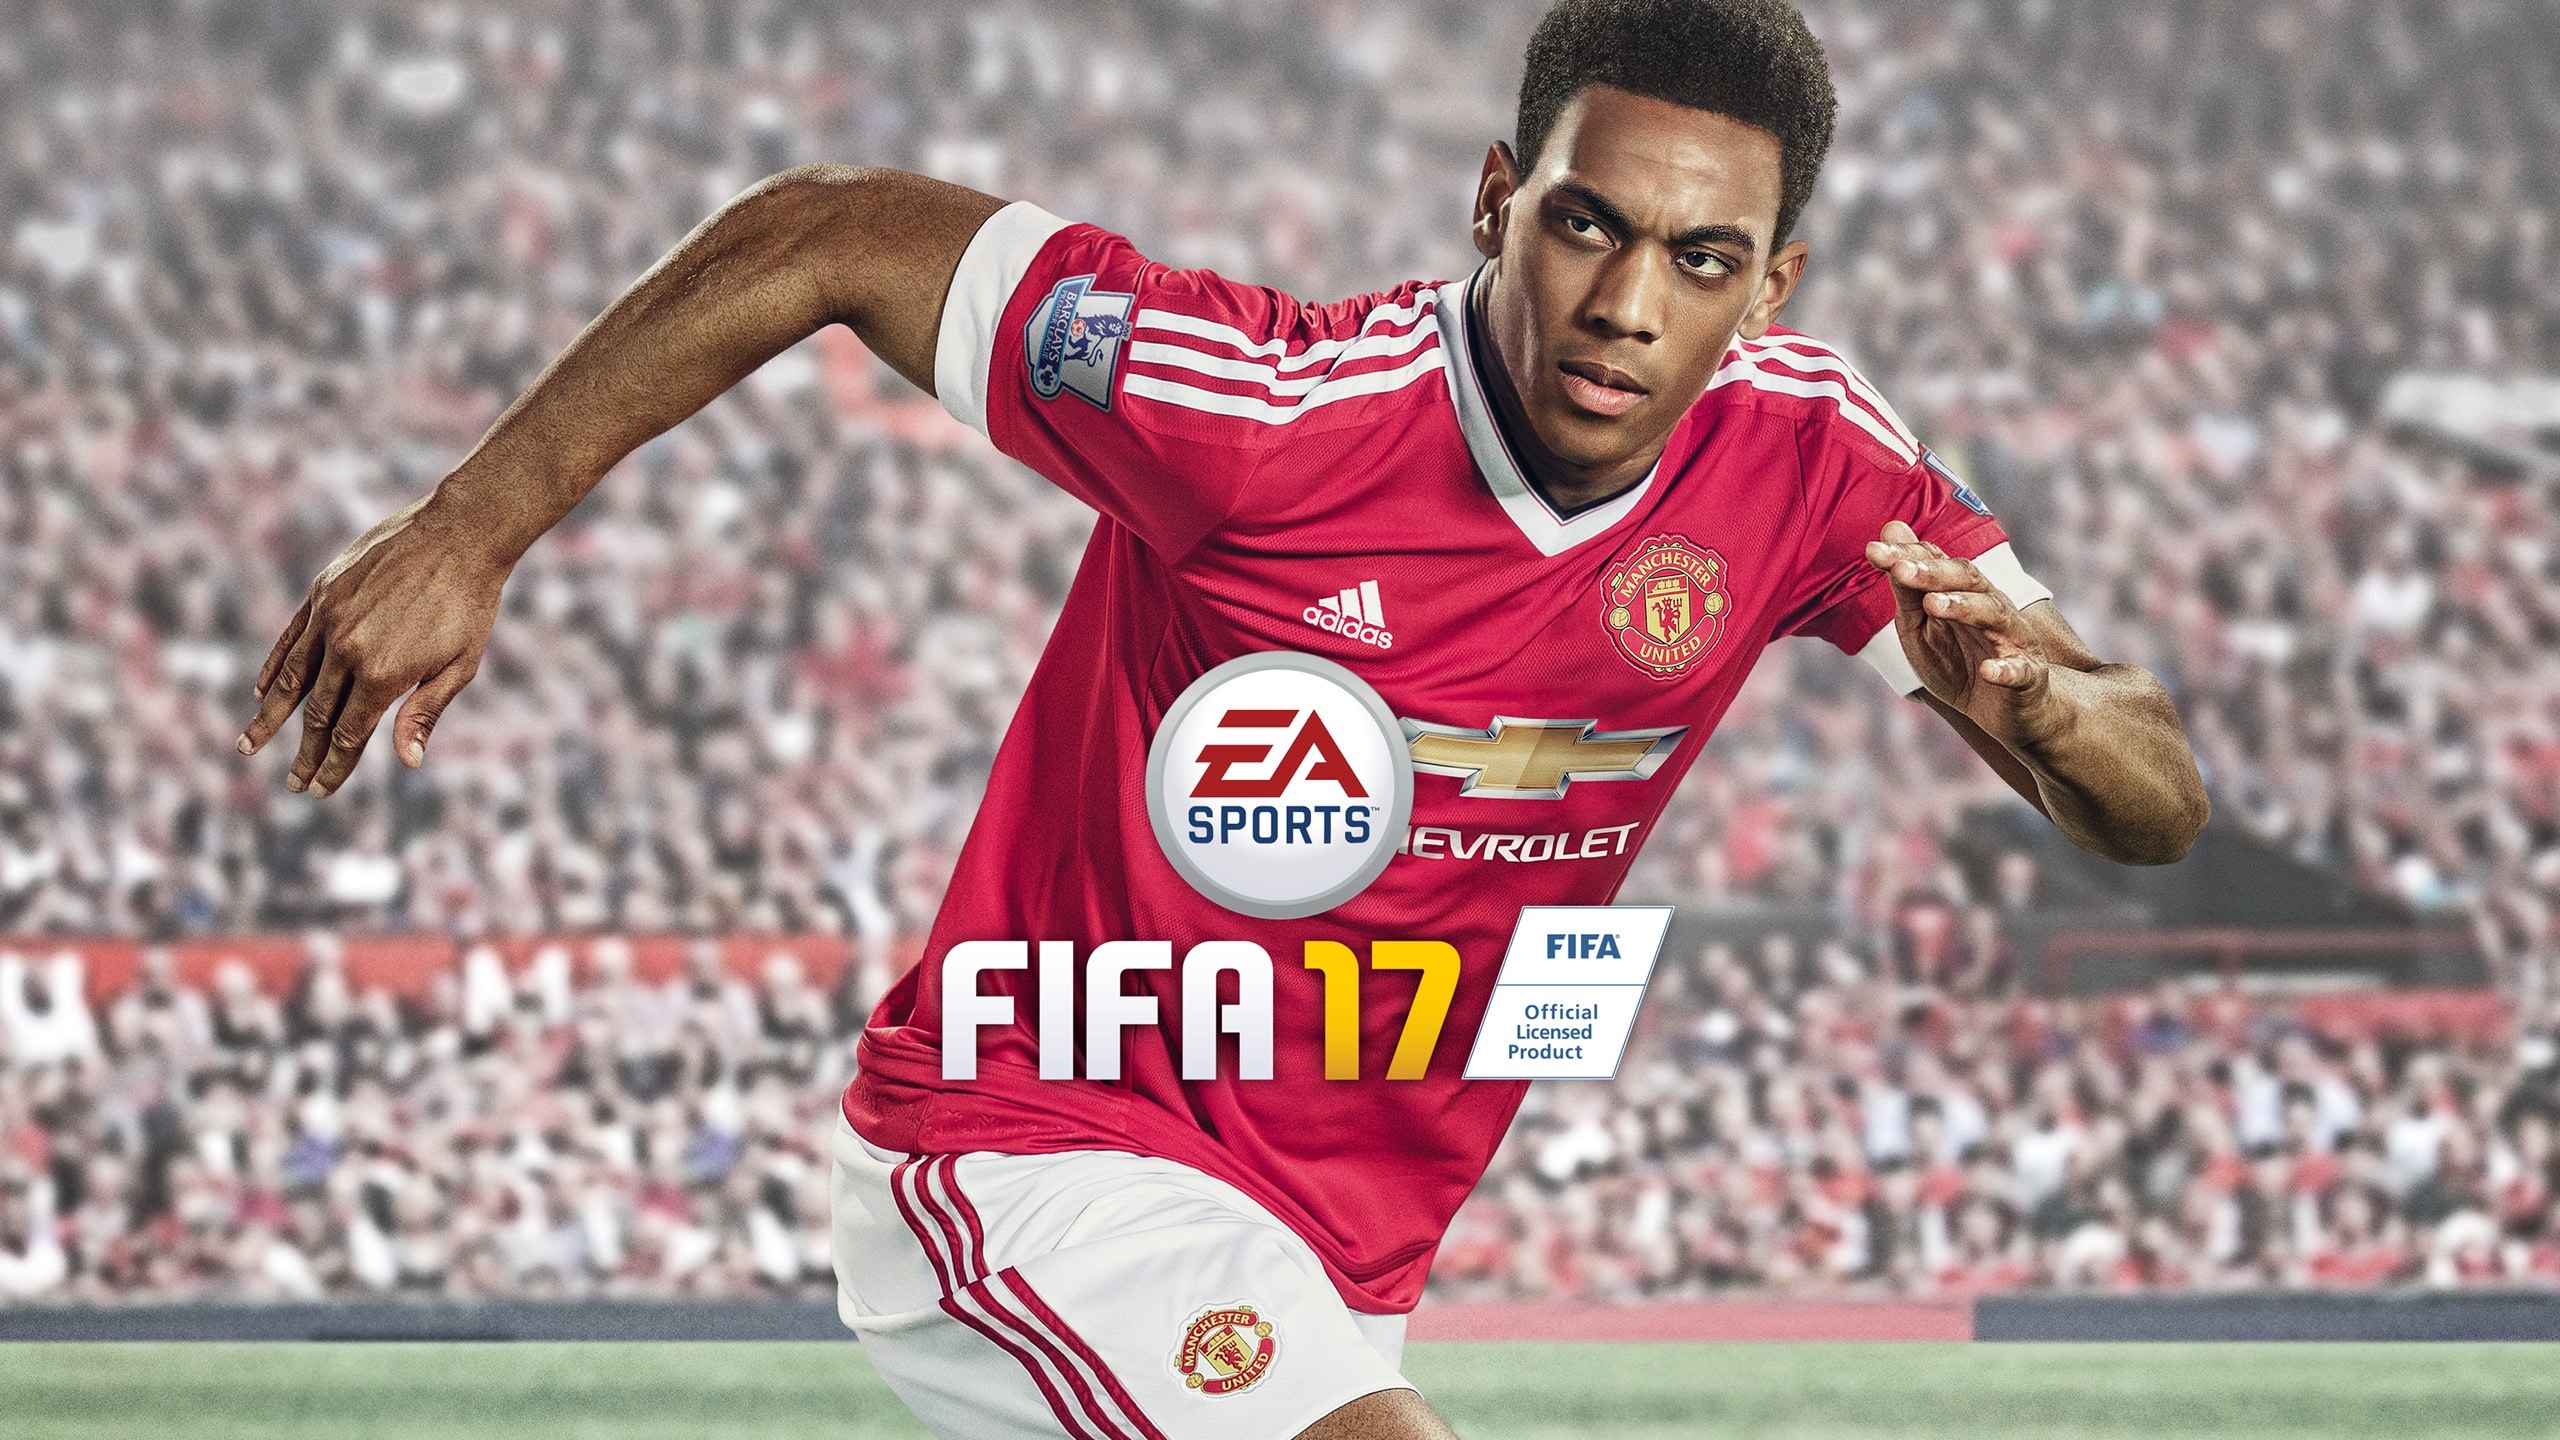 FIFA 17 Latest PC Version Free Download 2019 